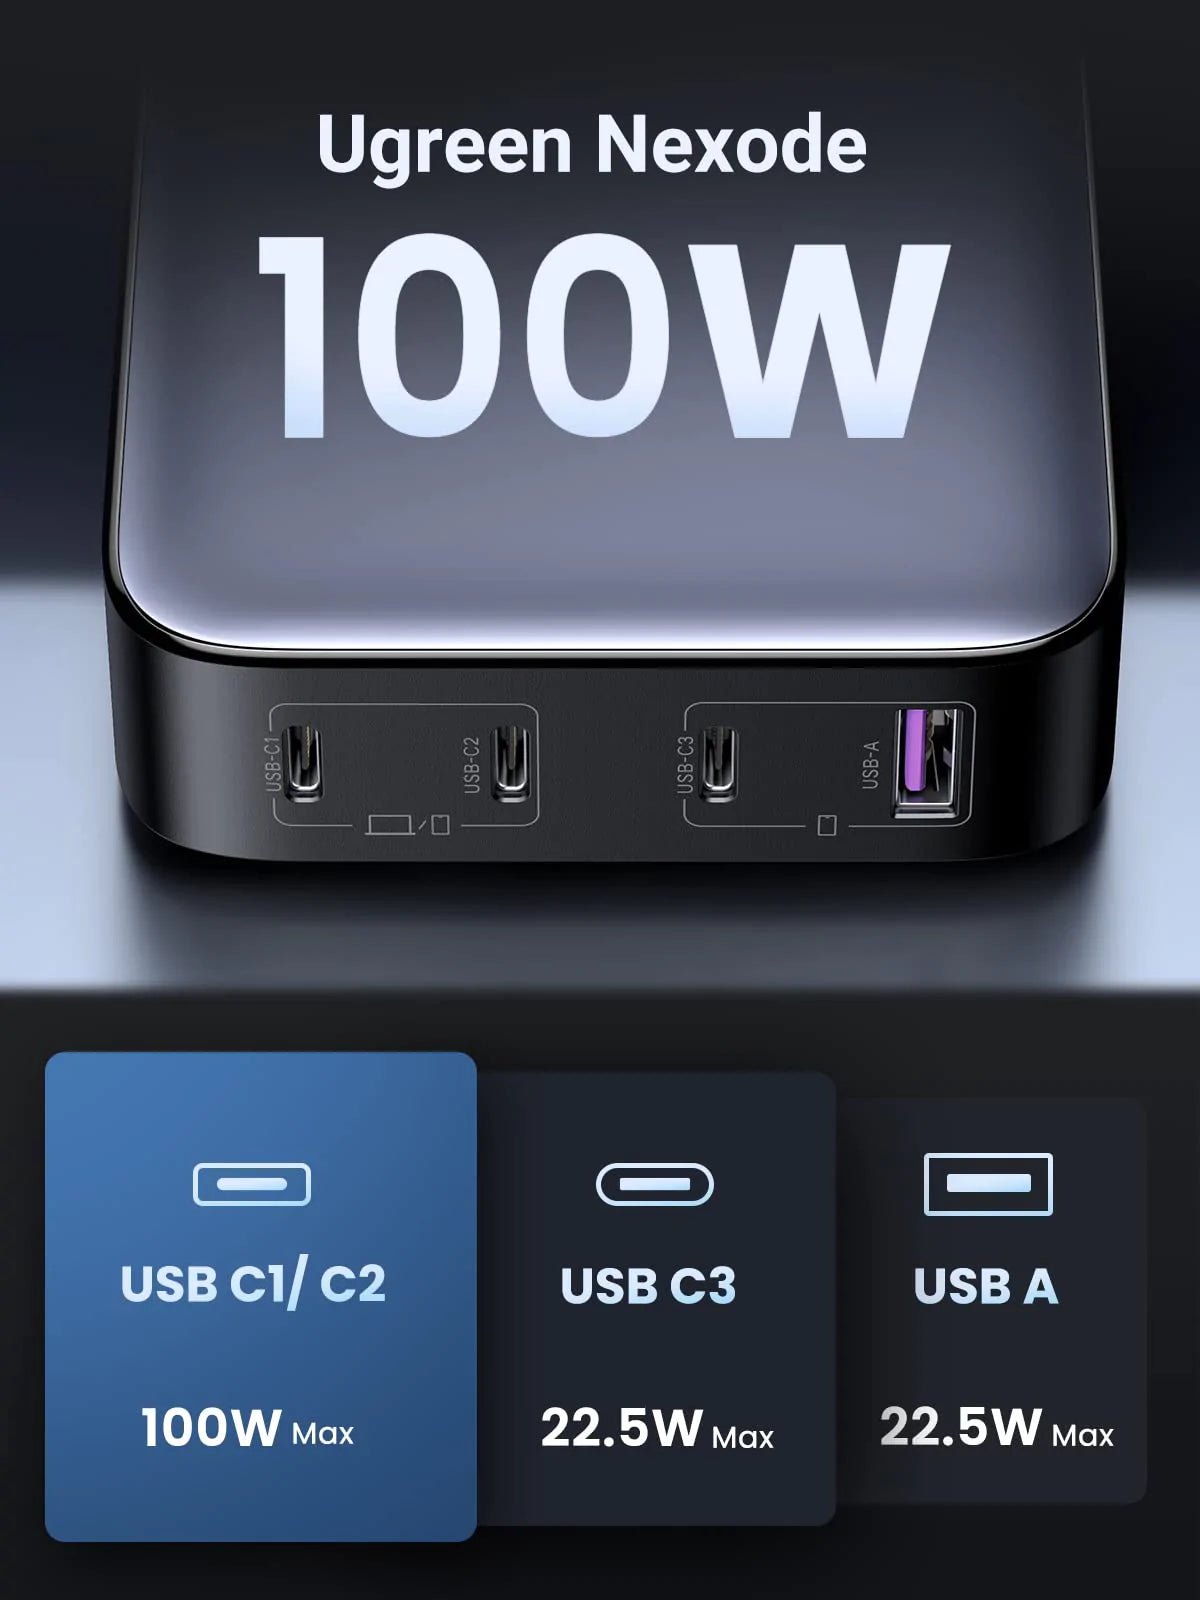 UGREEN Nexode USB C Charger 100W GaN Desktop Charger 4 Ports Laptop Ad